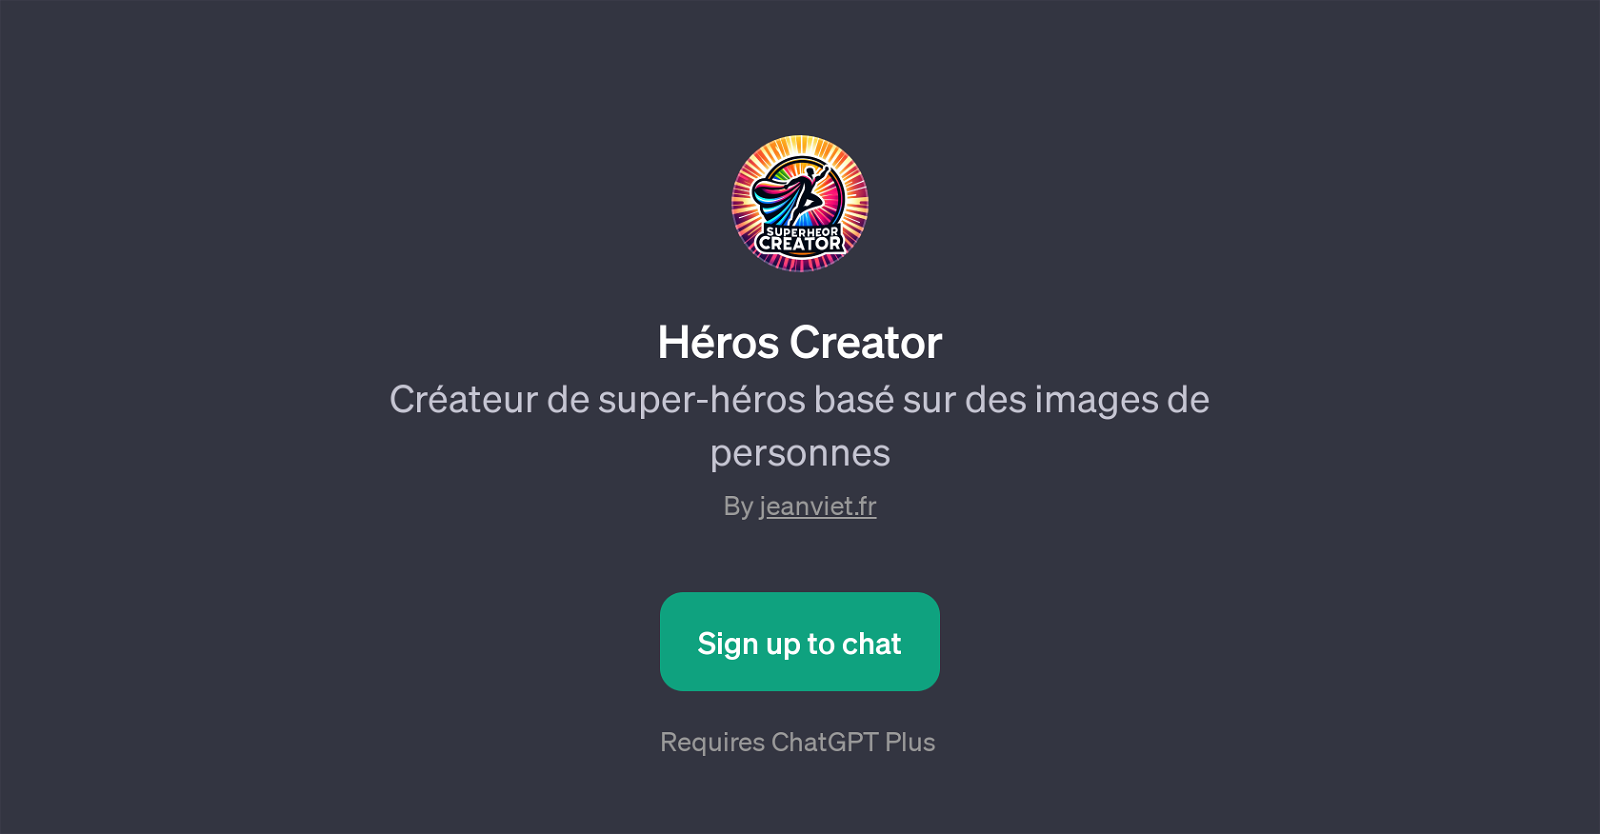 Hros Creator website